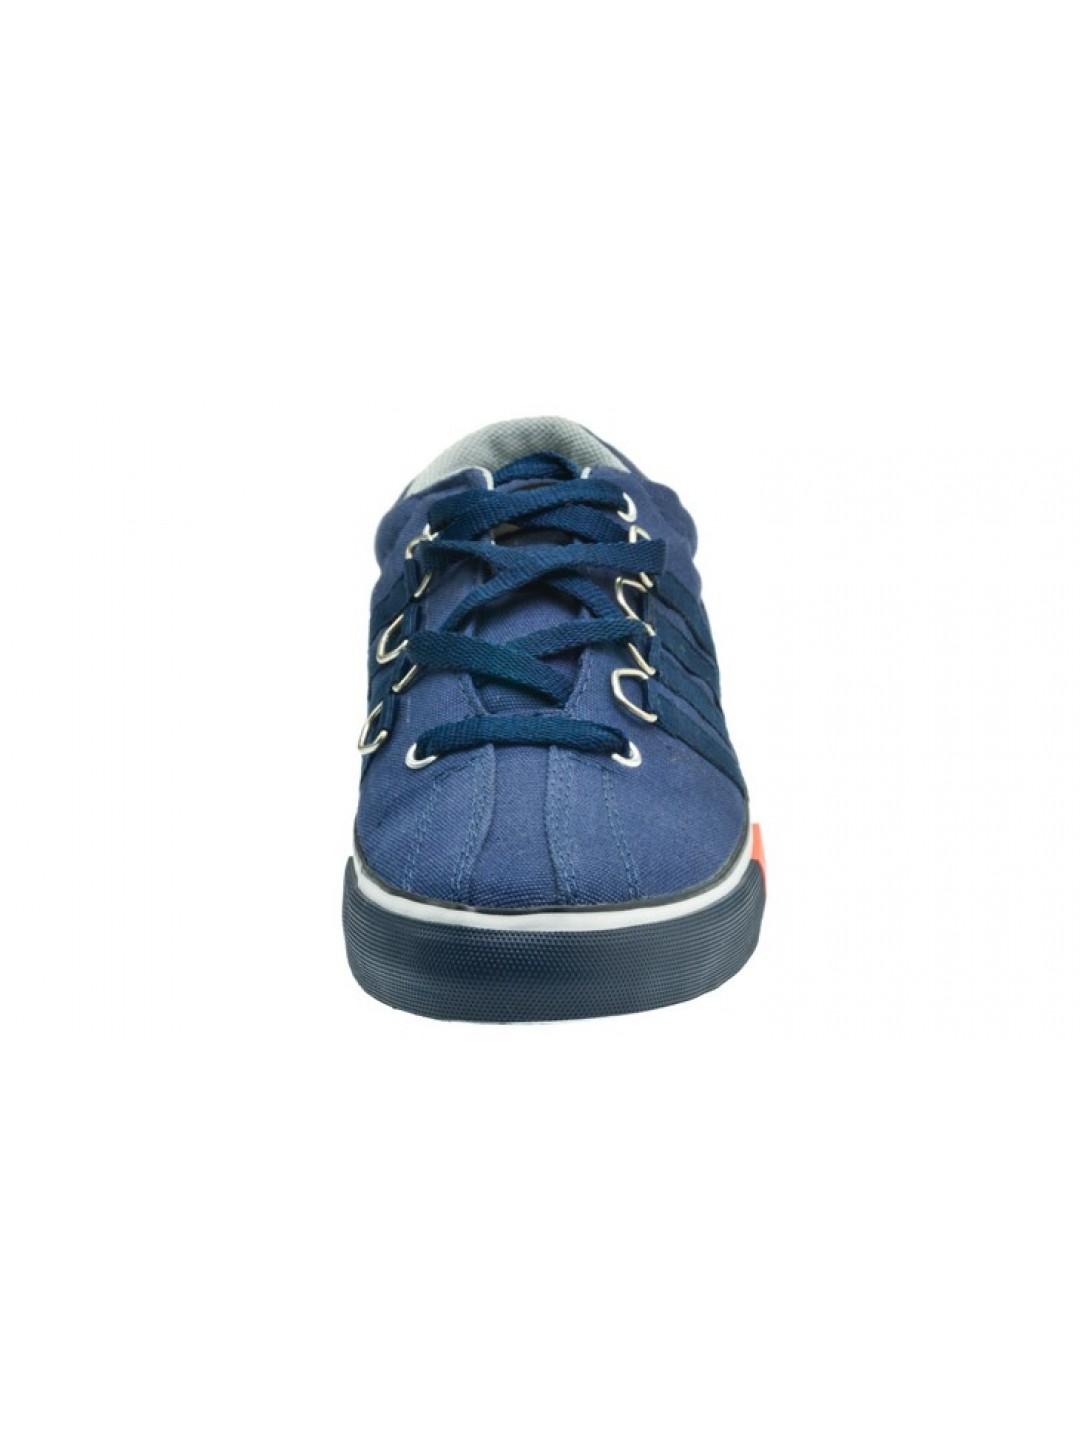 Sparx Navy Blue Men Casual Shoes SM162-NB